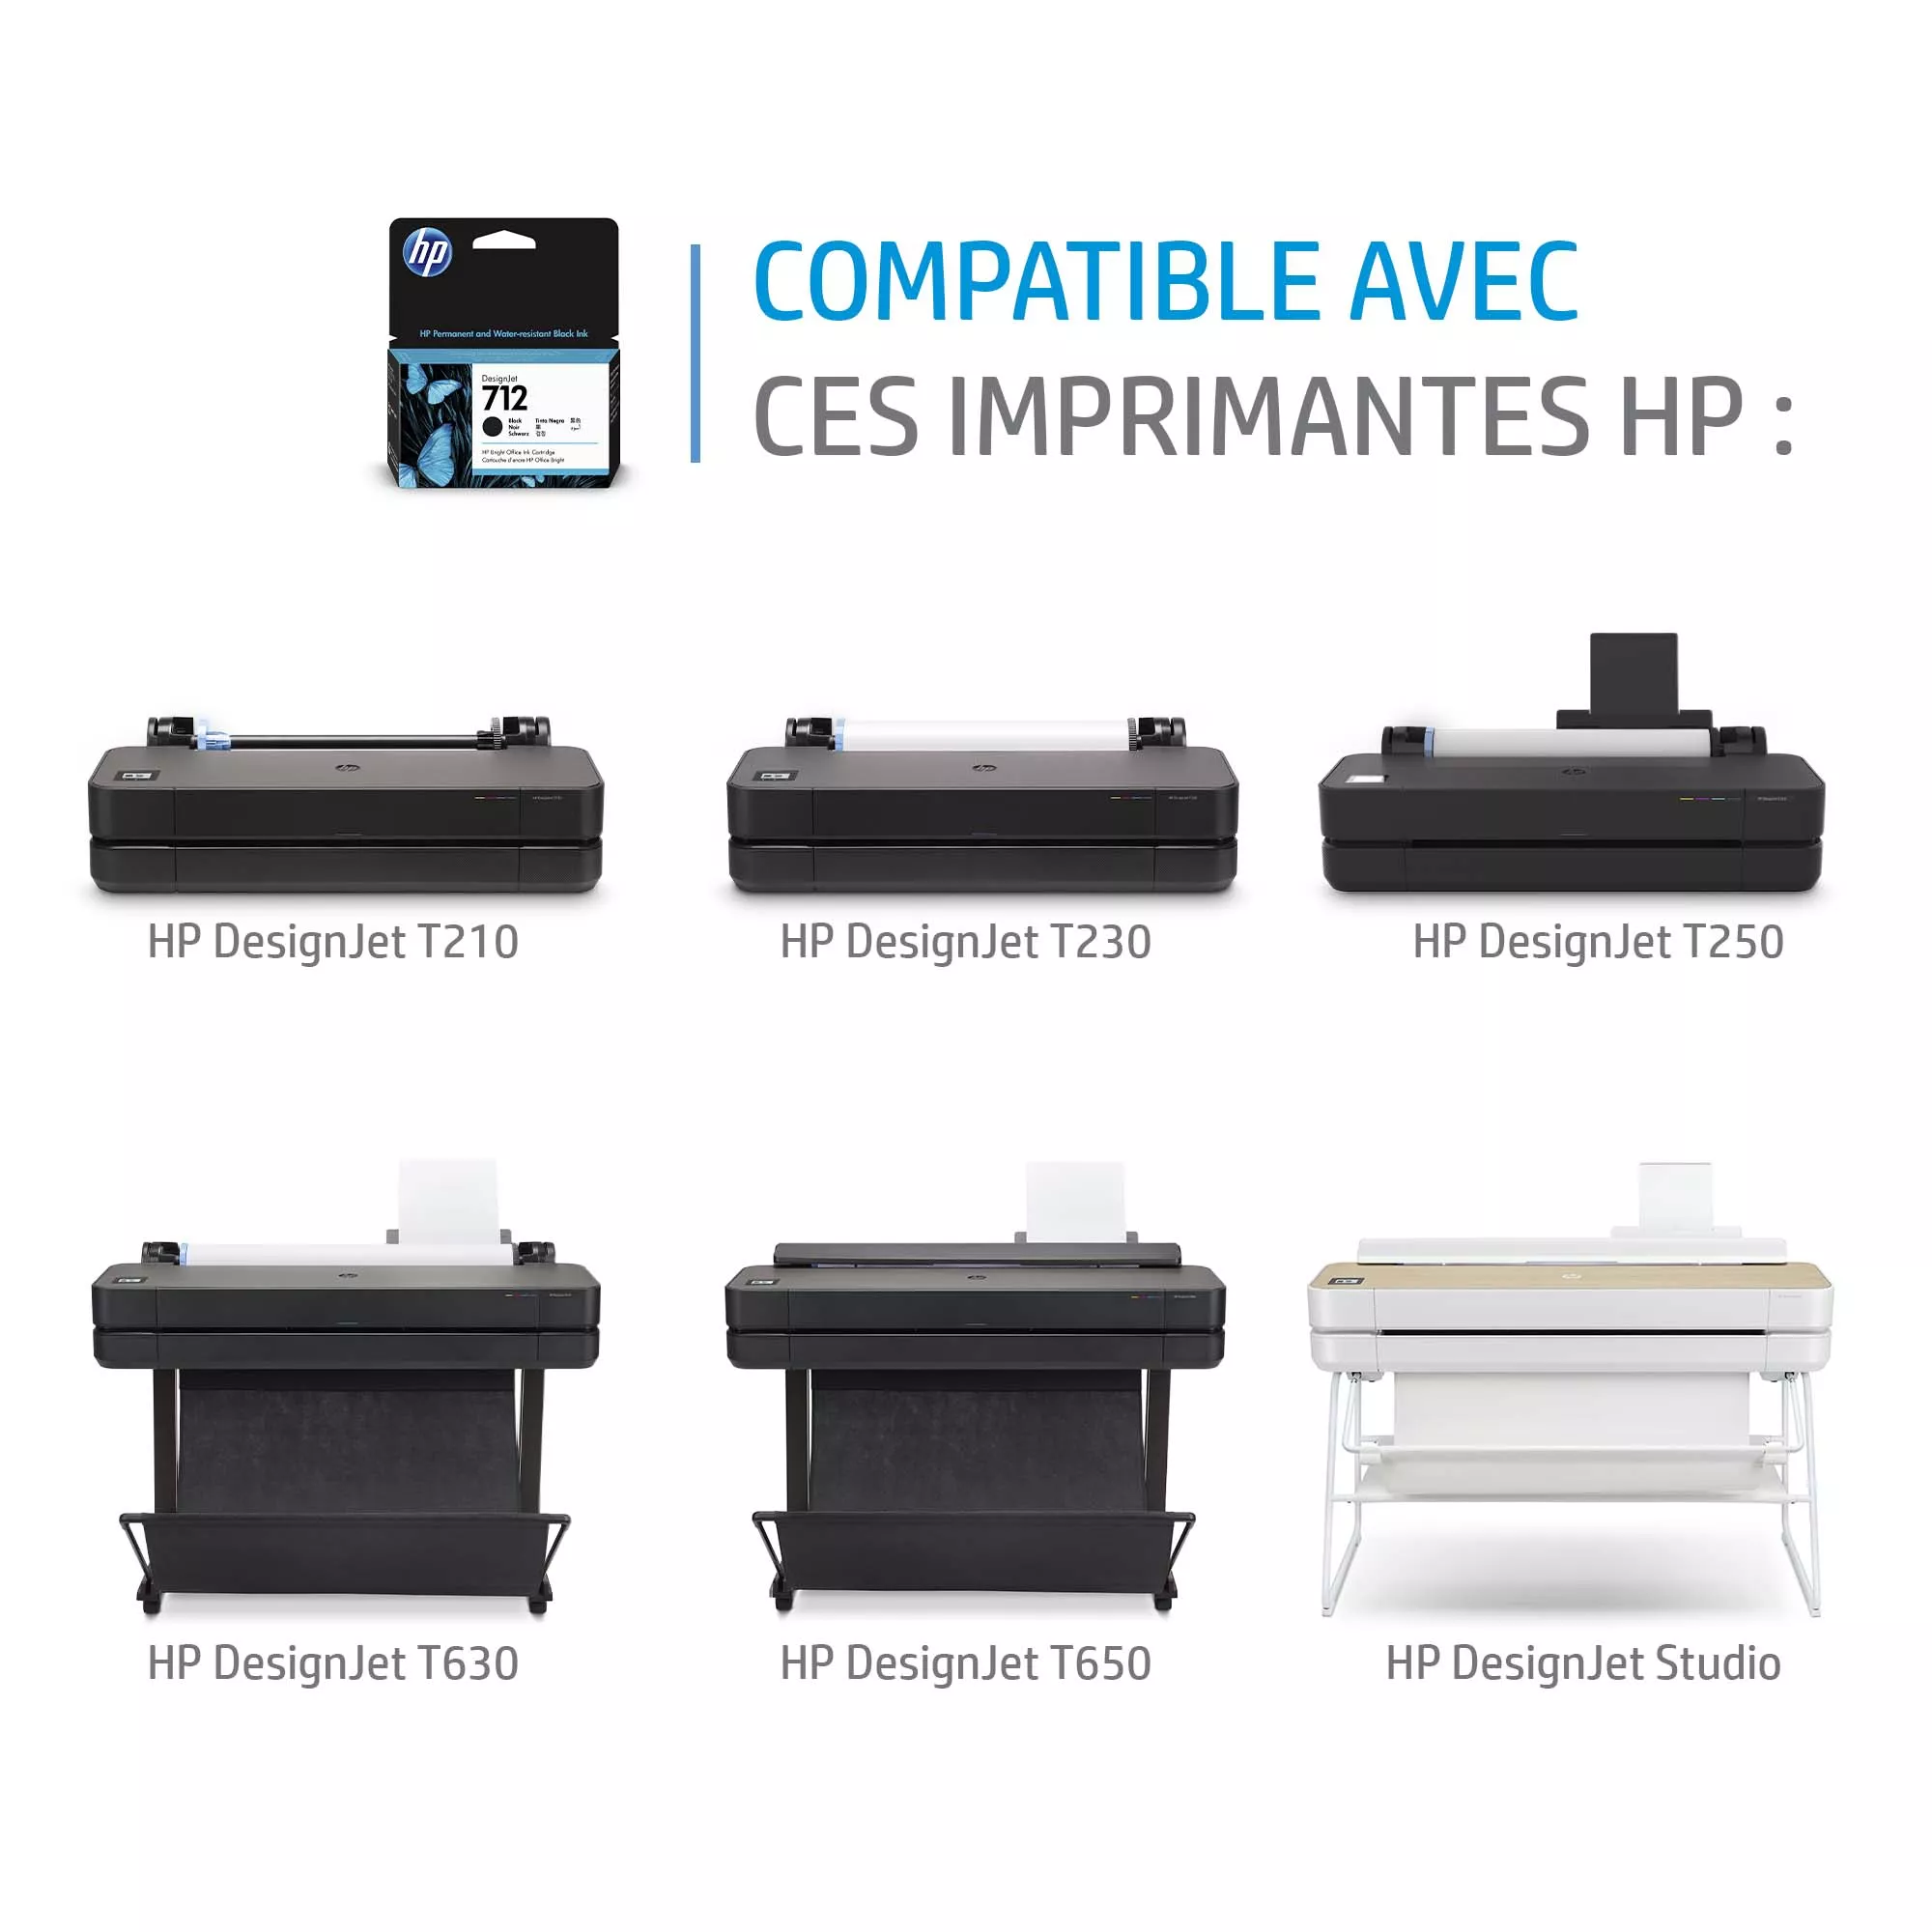 Vente HP 712 29-ml Magenta DesignJet Ink Cartridge HP au meilleur prix - visuel 4